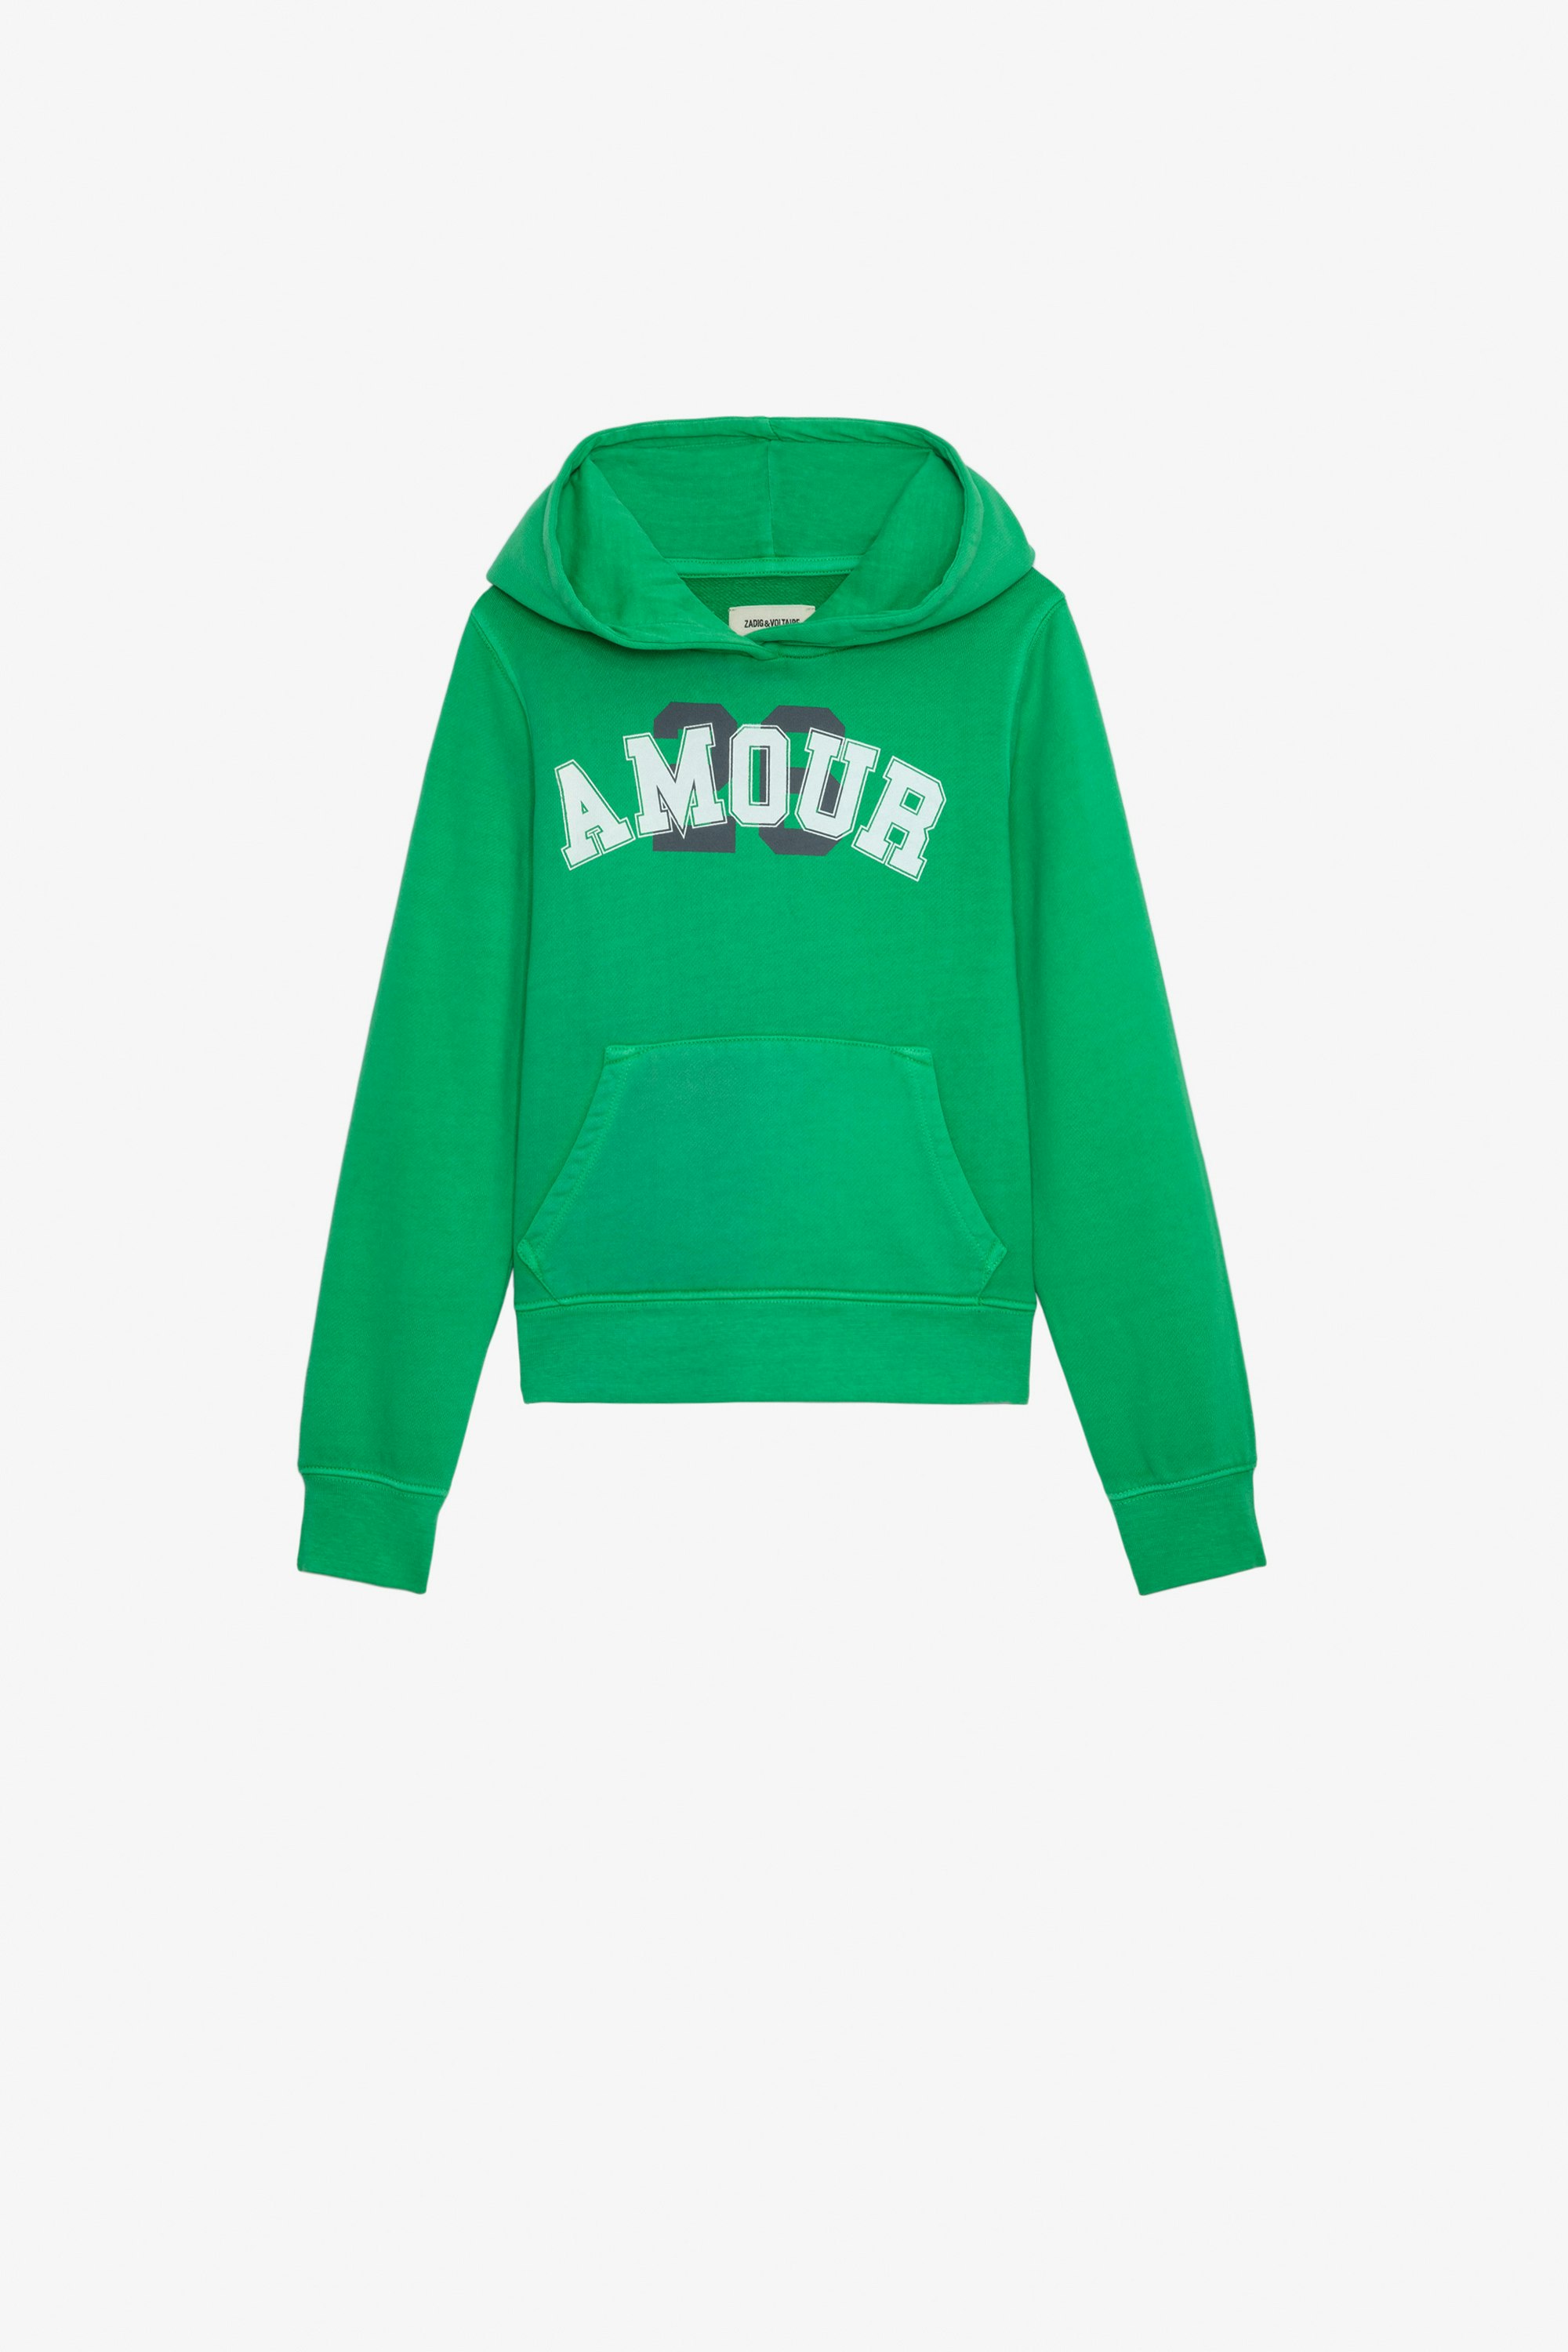 Spencer Girls’ Sweatshirt - Girls’ green cotton fleece hoodie with “Amour” slogan.